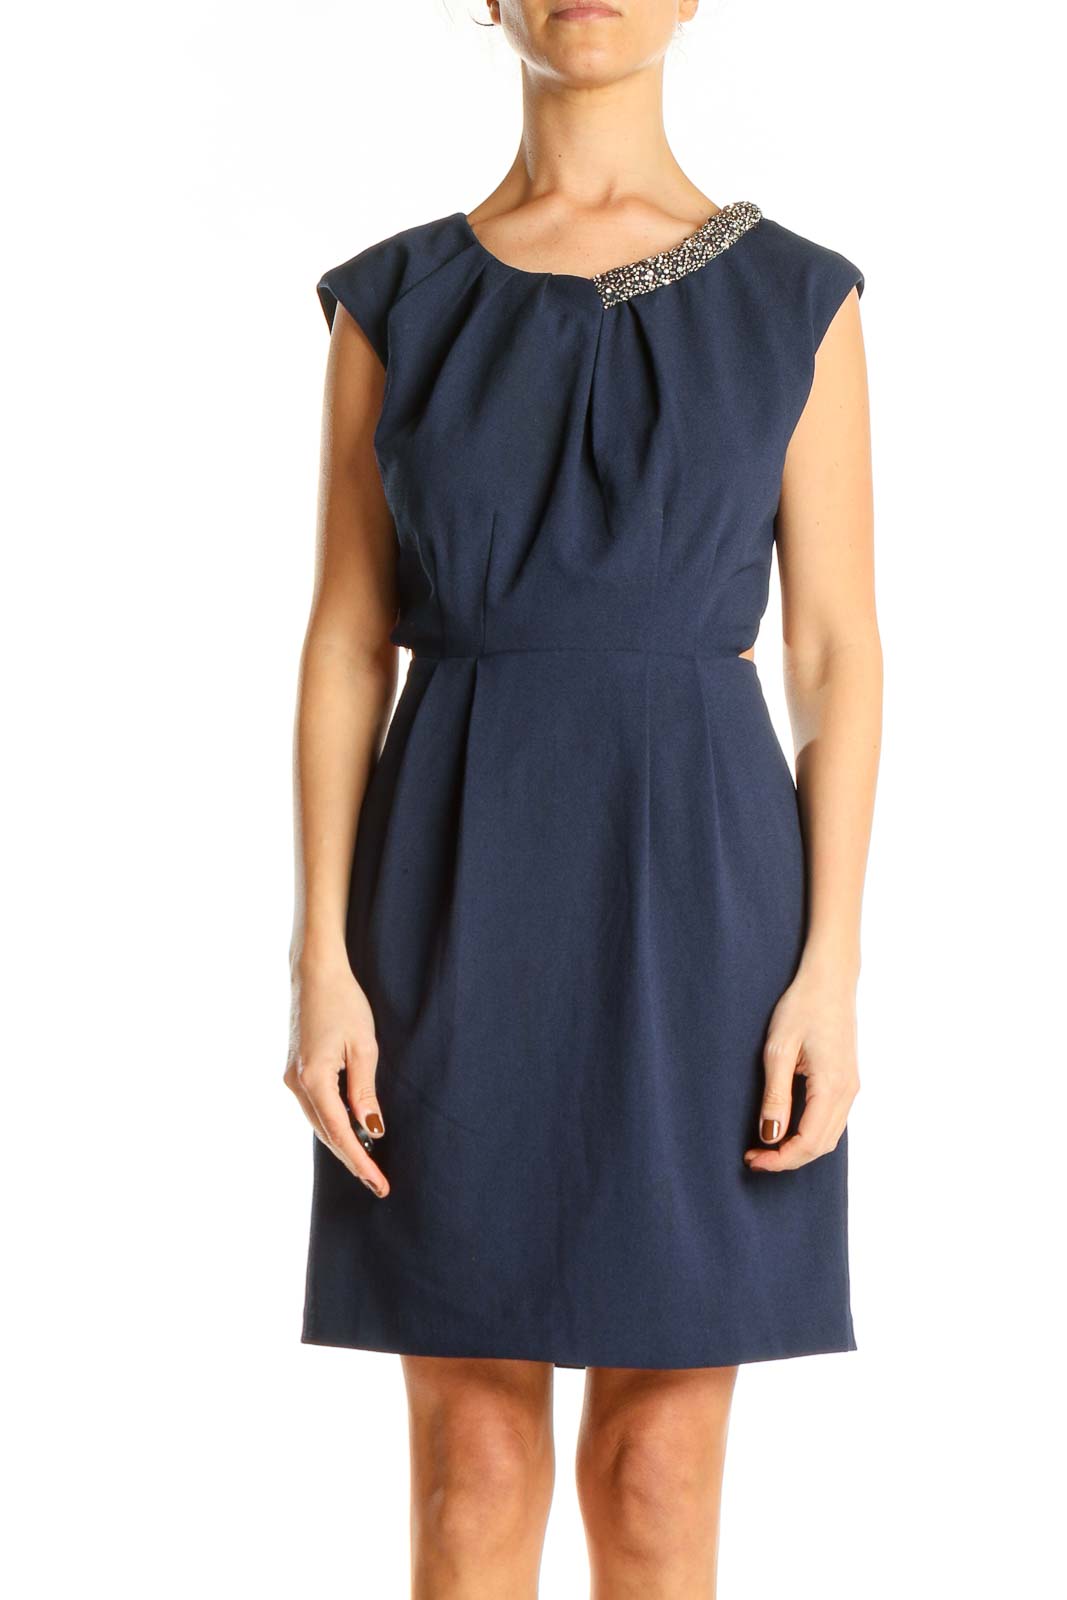 Blue Classic Sequin Neckline Fit & Flare Dress Front